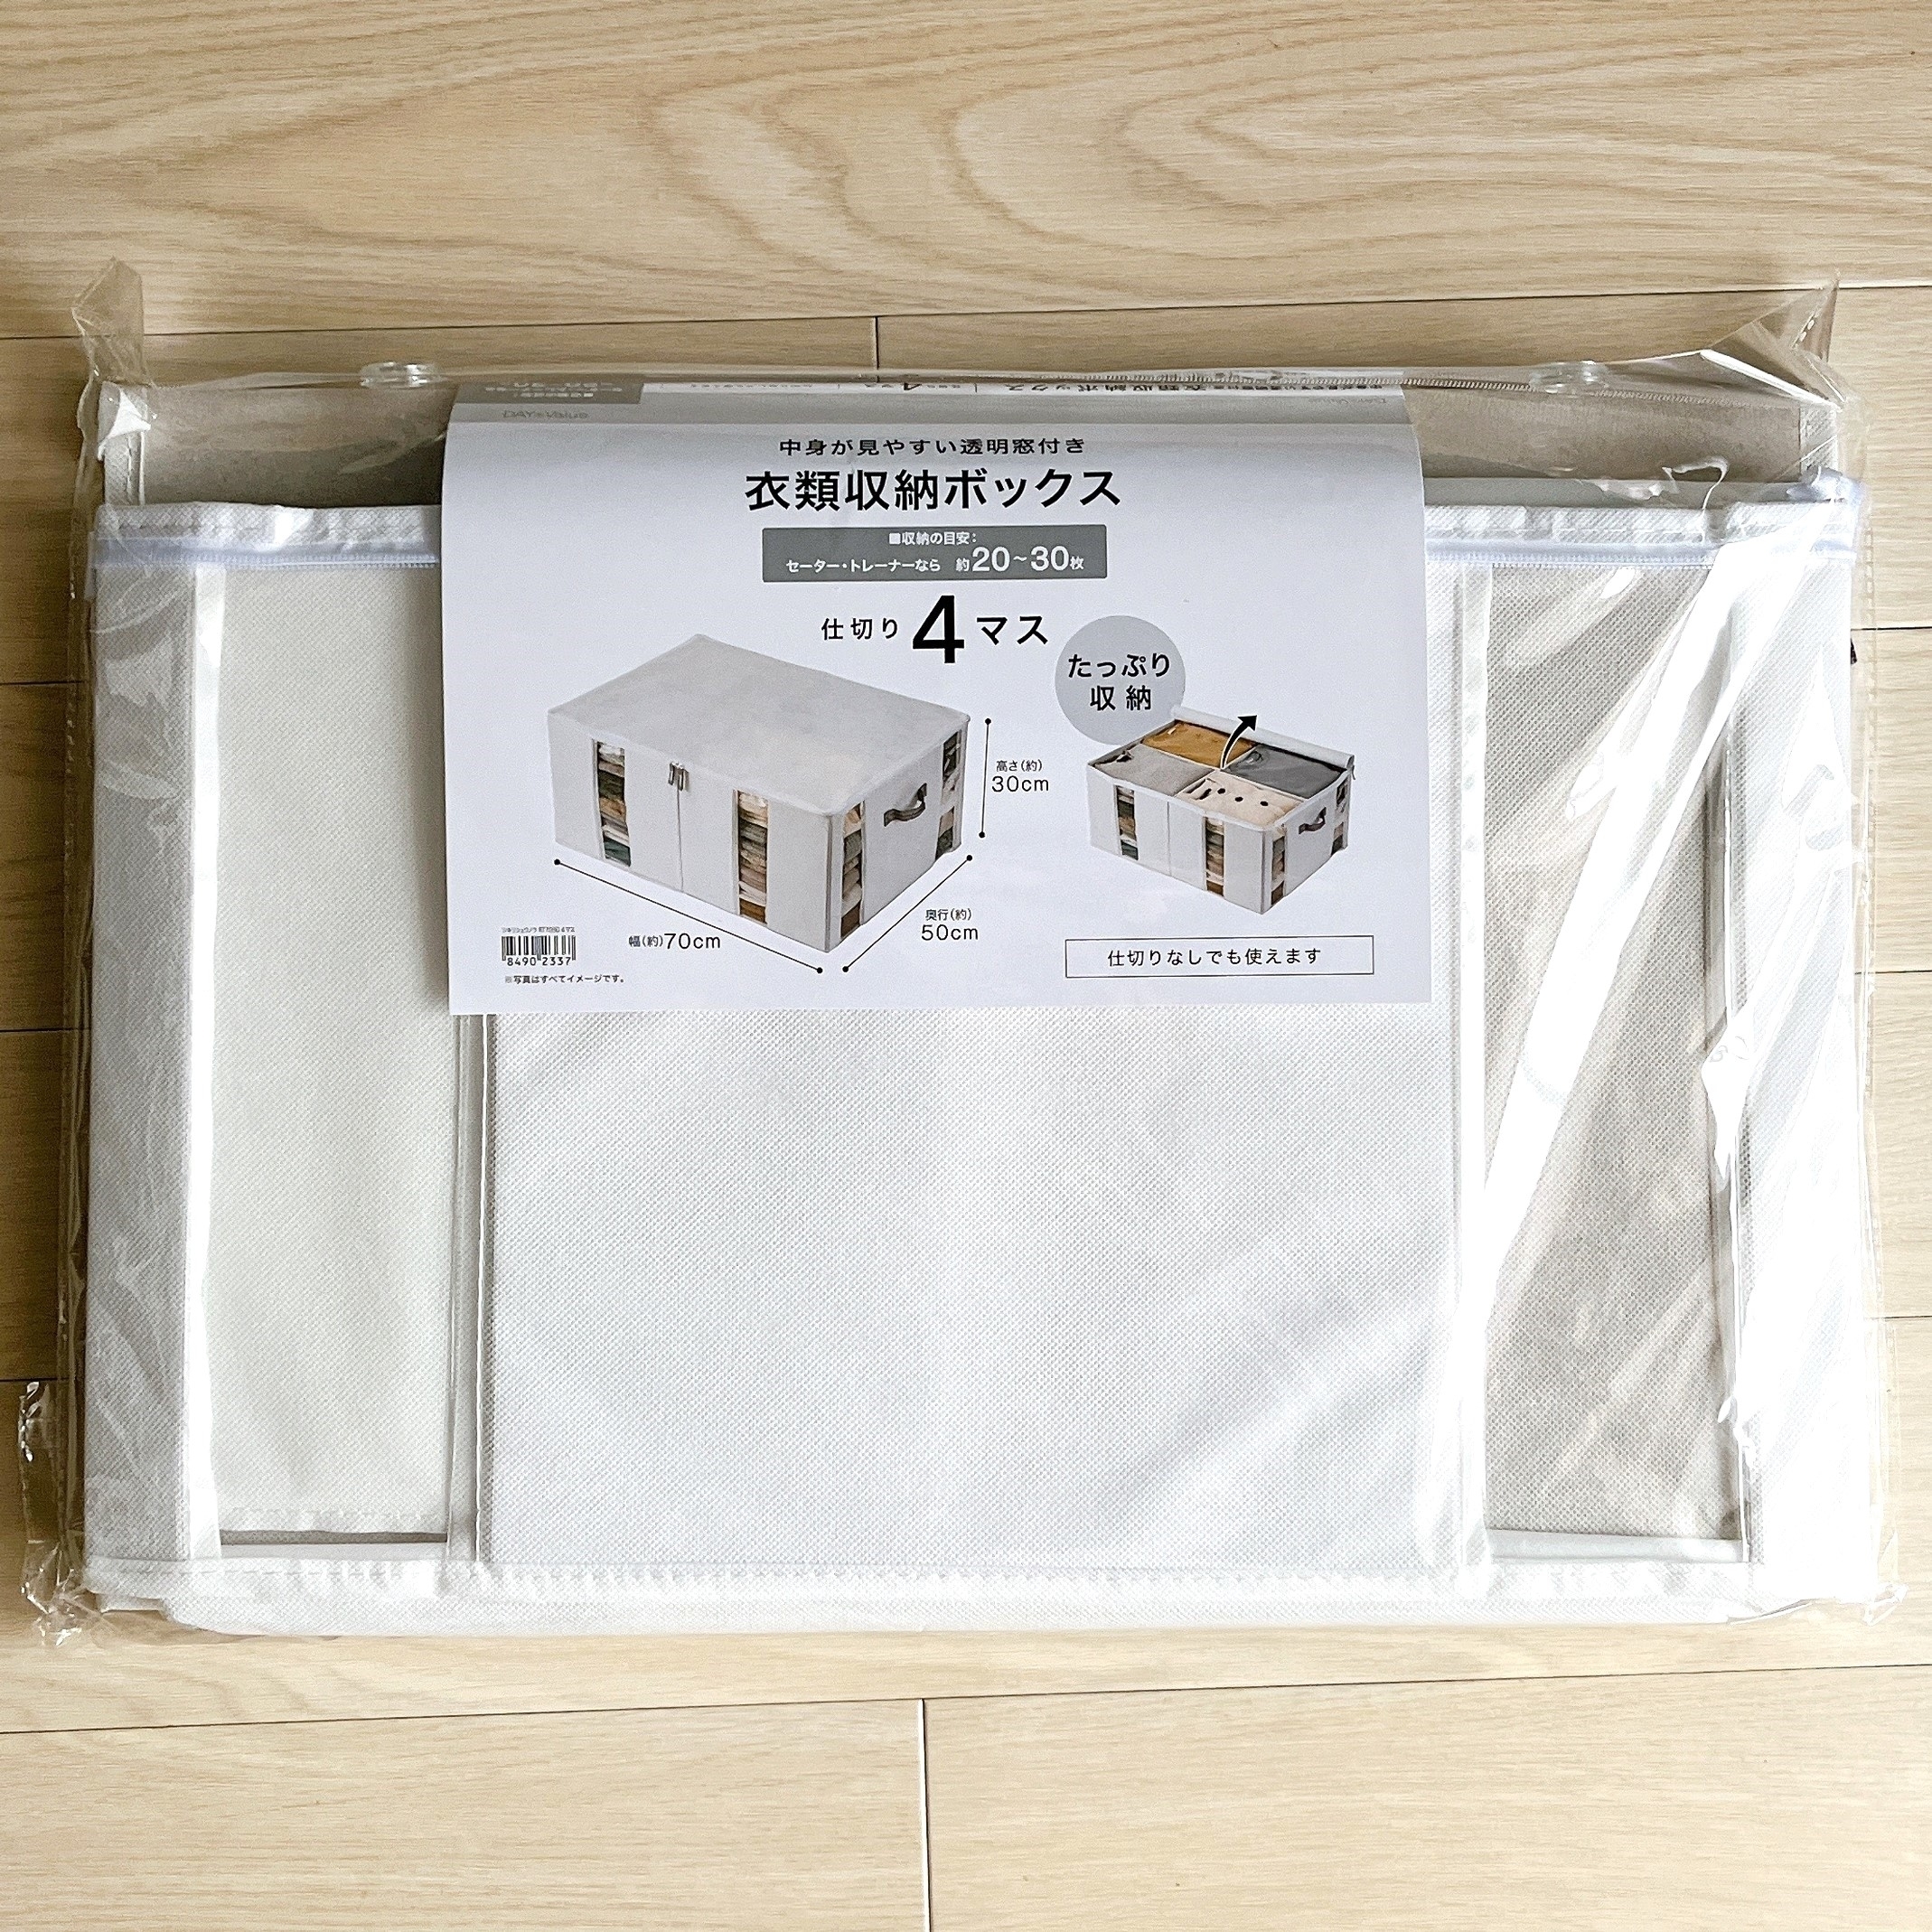 NITORI（ニトリ）の便利アイテム「透明窓付き 衣類収納ボックス（RT7050 仕切り4マス）」